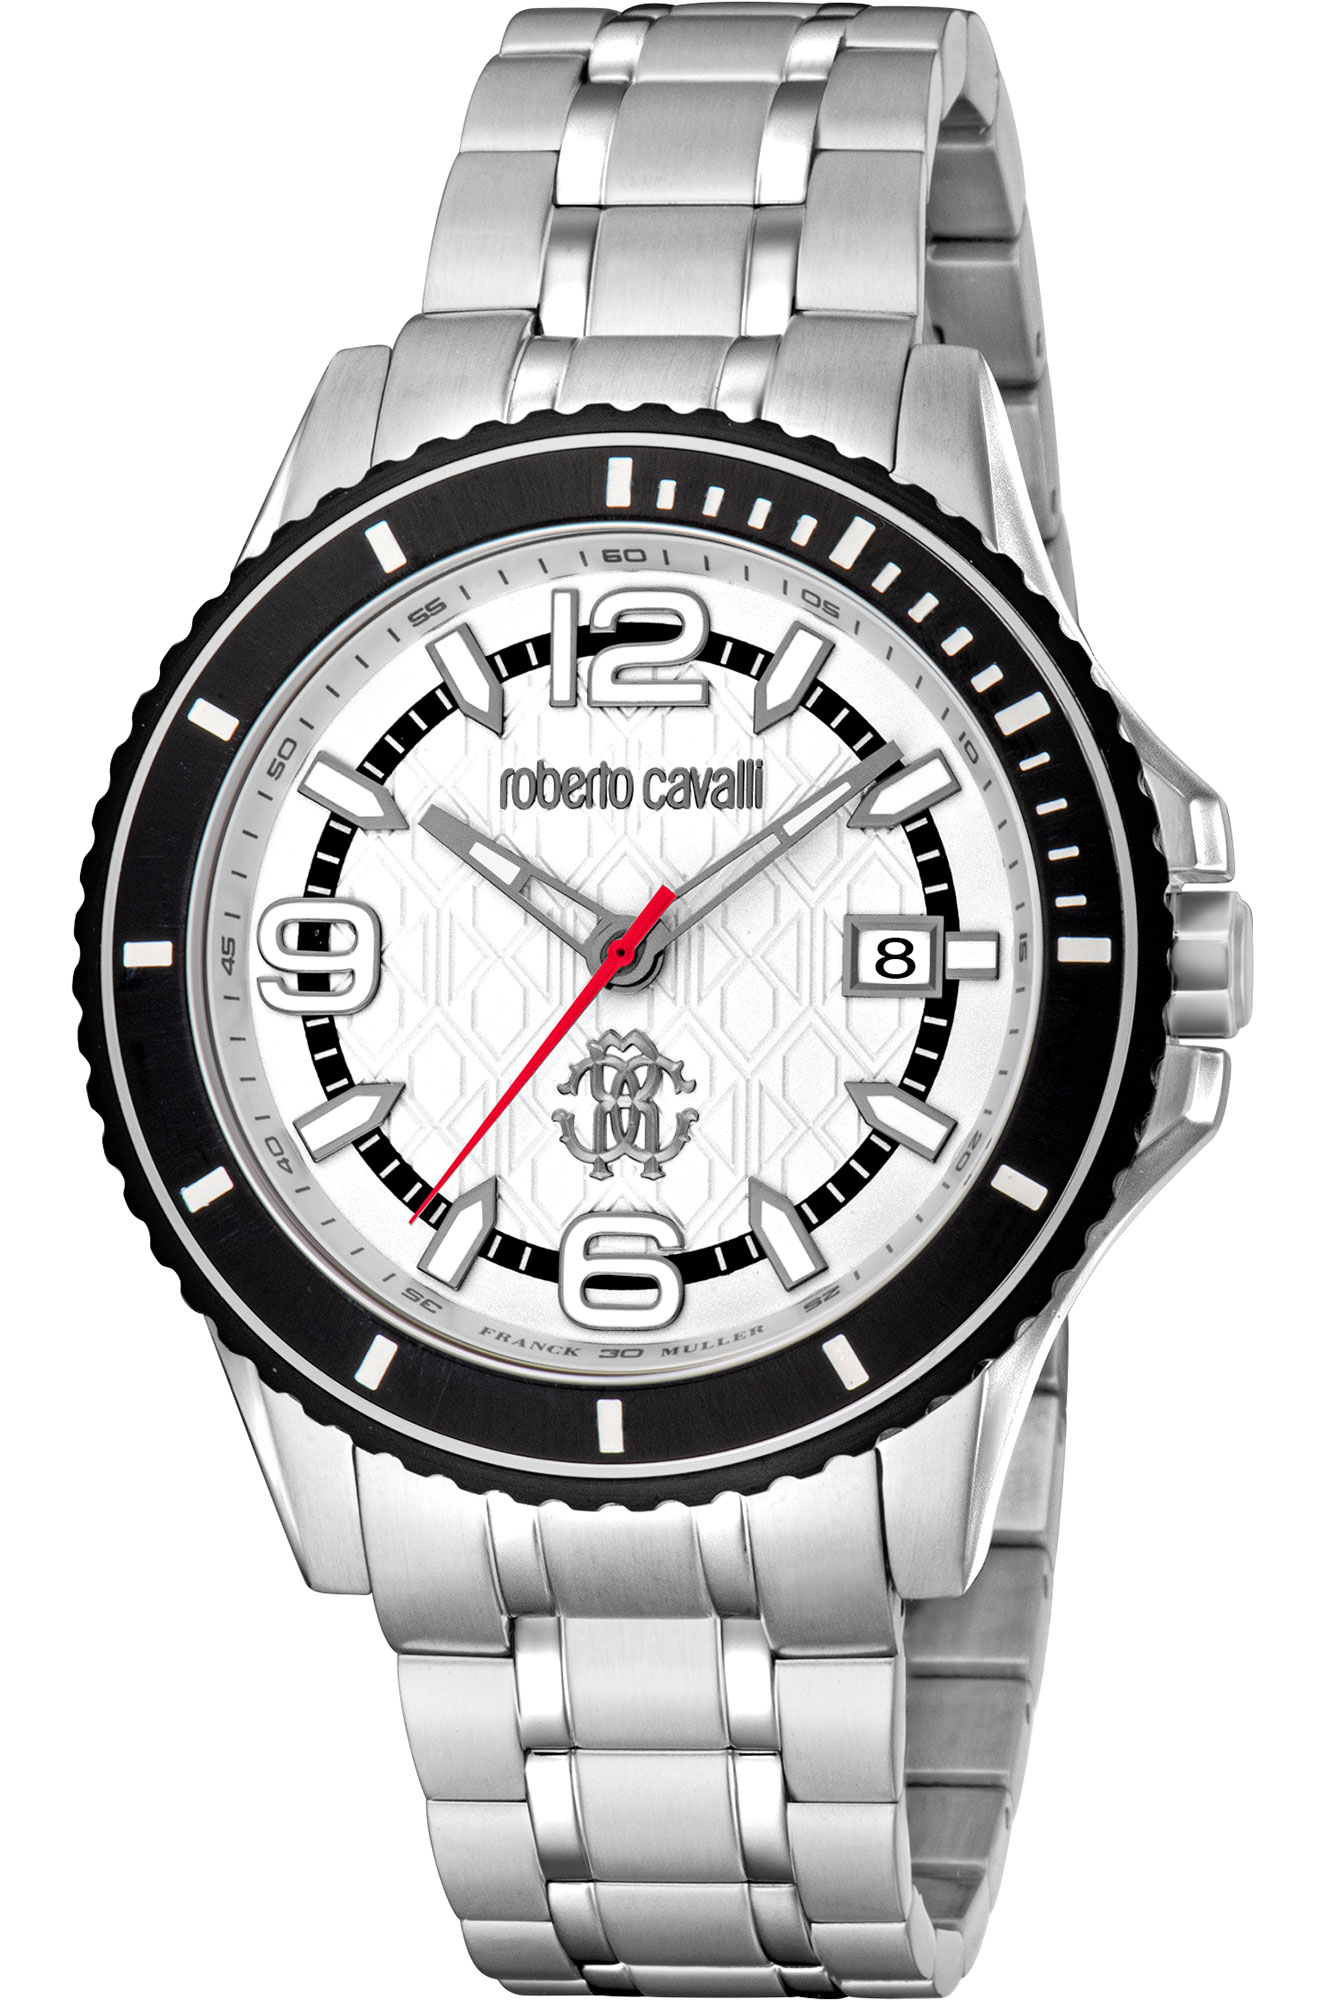 Watch Roberto Cavalli by Franck Muller rv1g217m0041